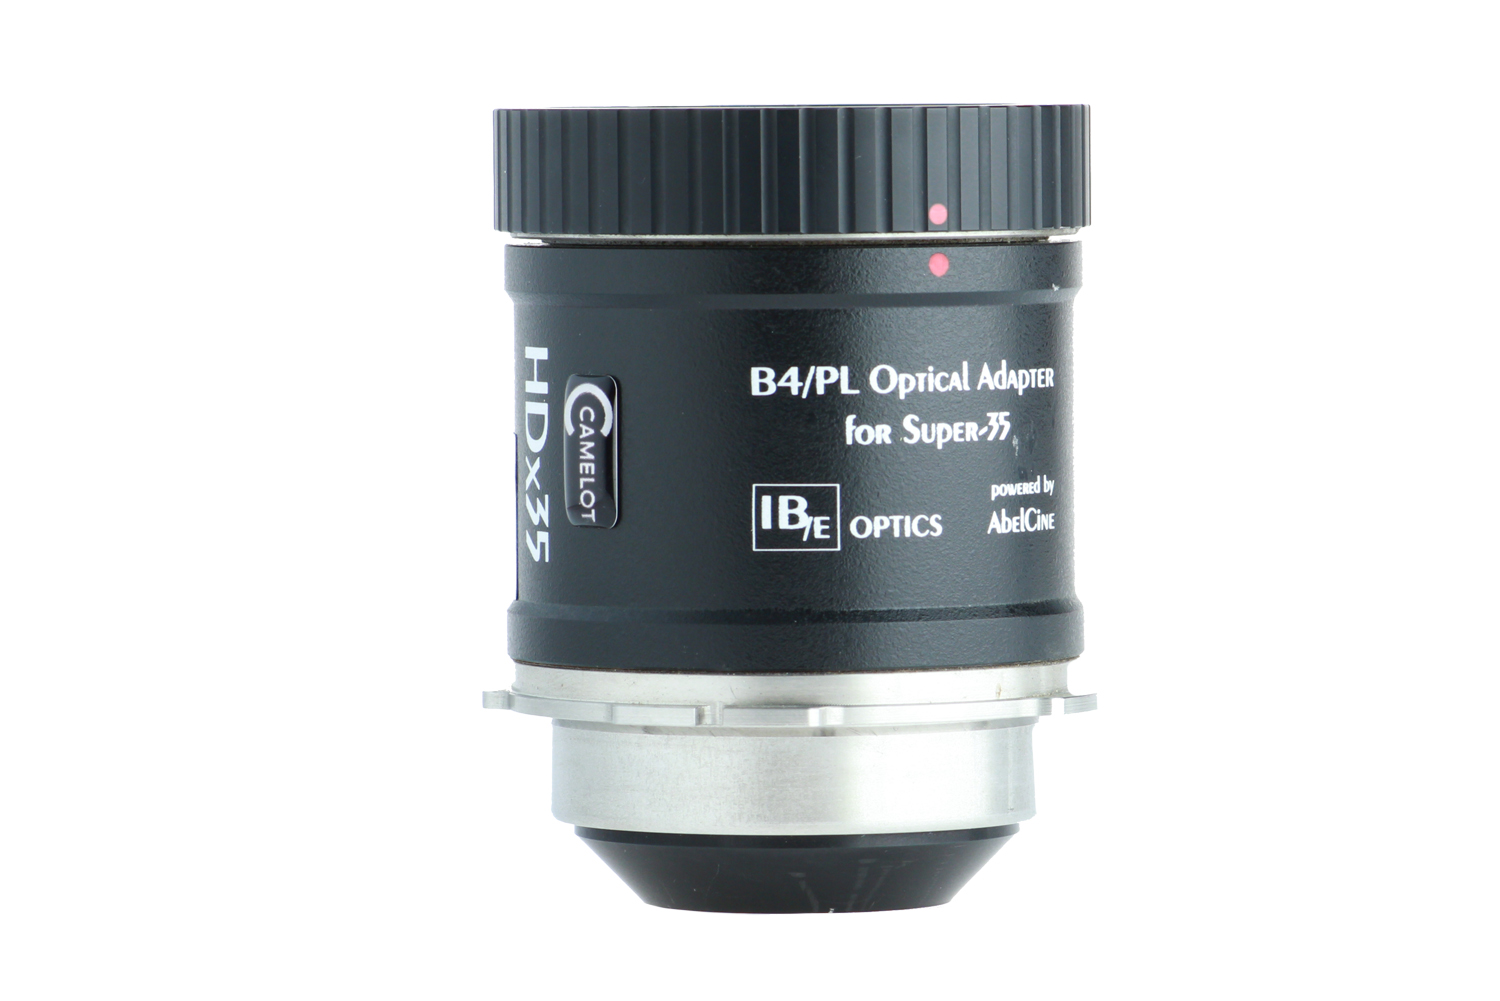 IB_E Optics HDx35 Adapter PL_B4